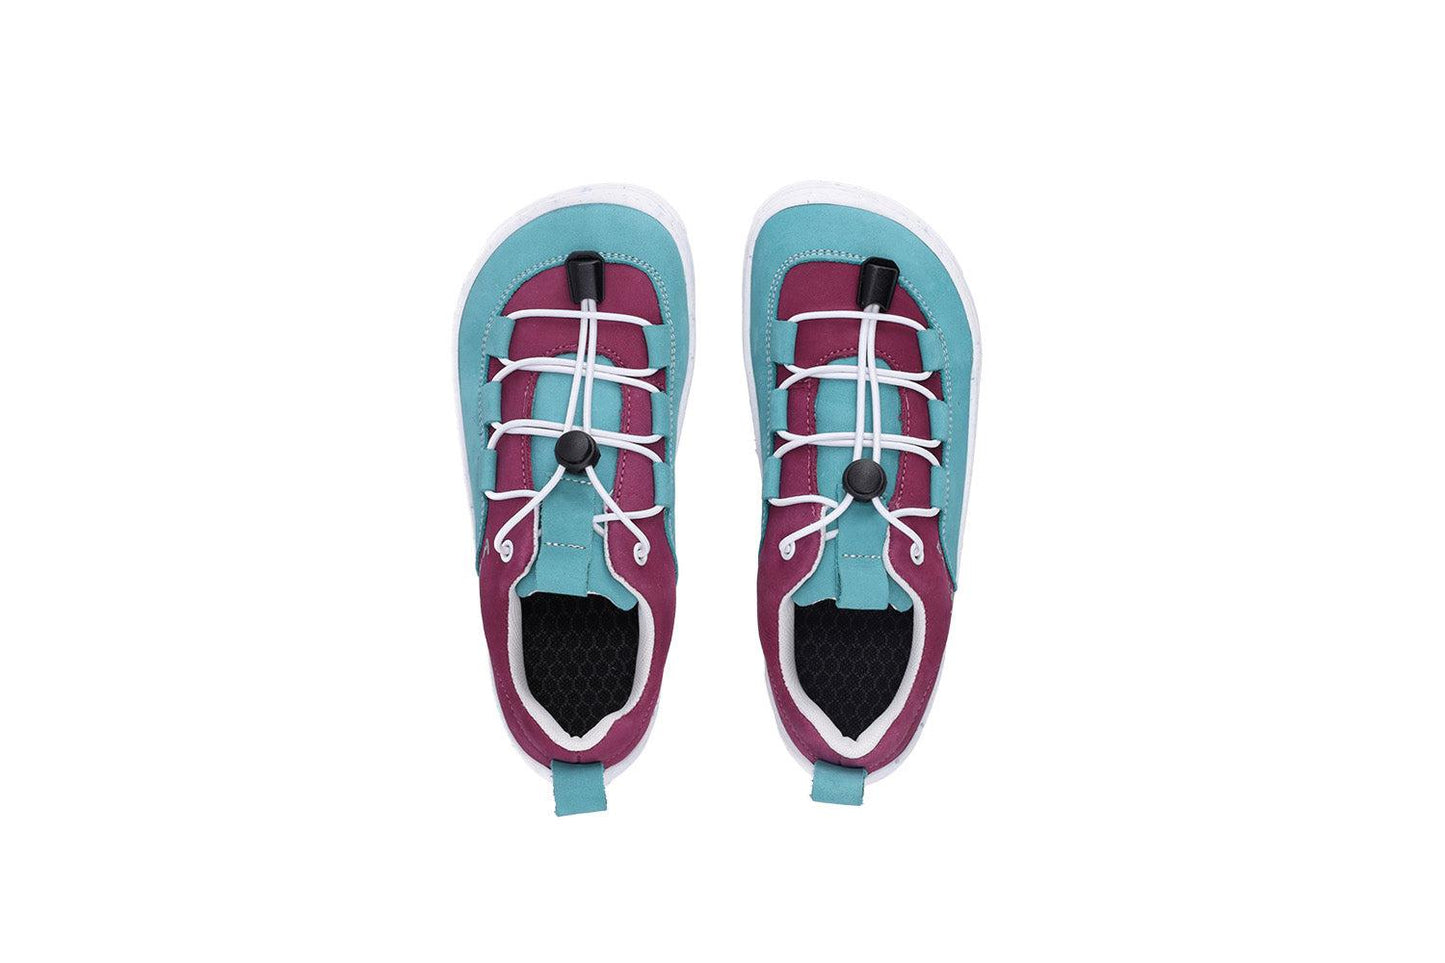 Barefoot zapatillas de niños Be Lenka Xplorer - Light Teal & Plum